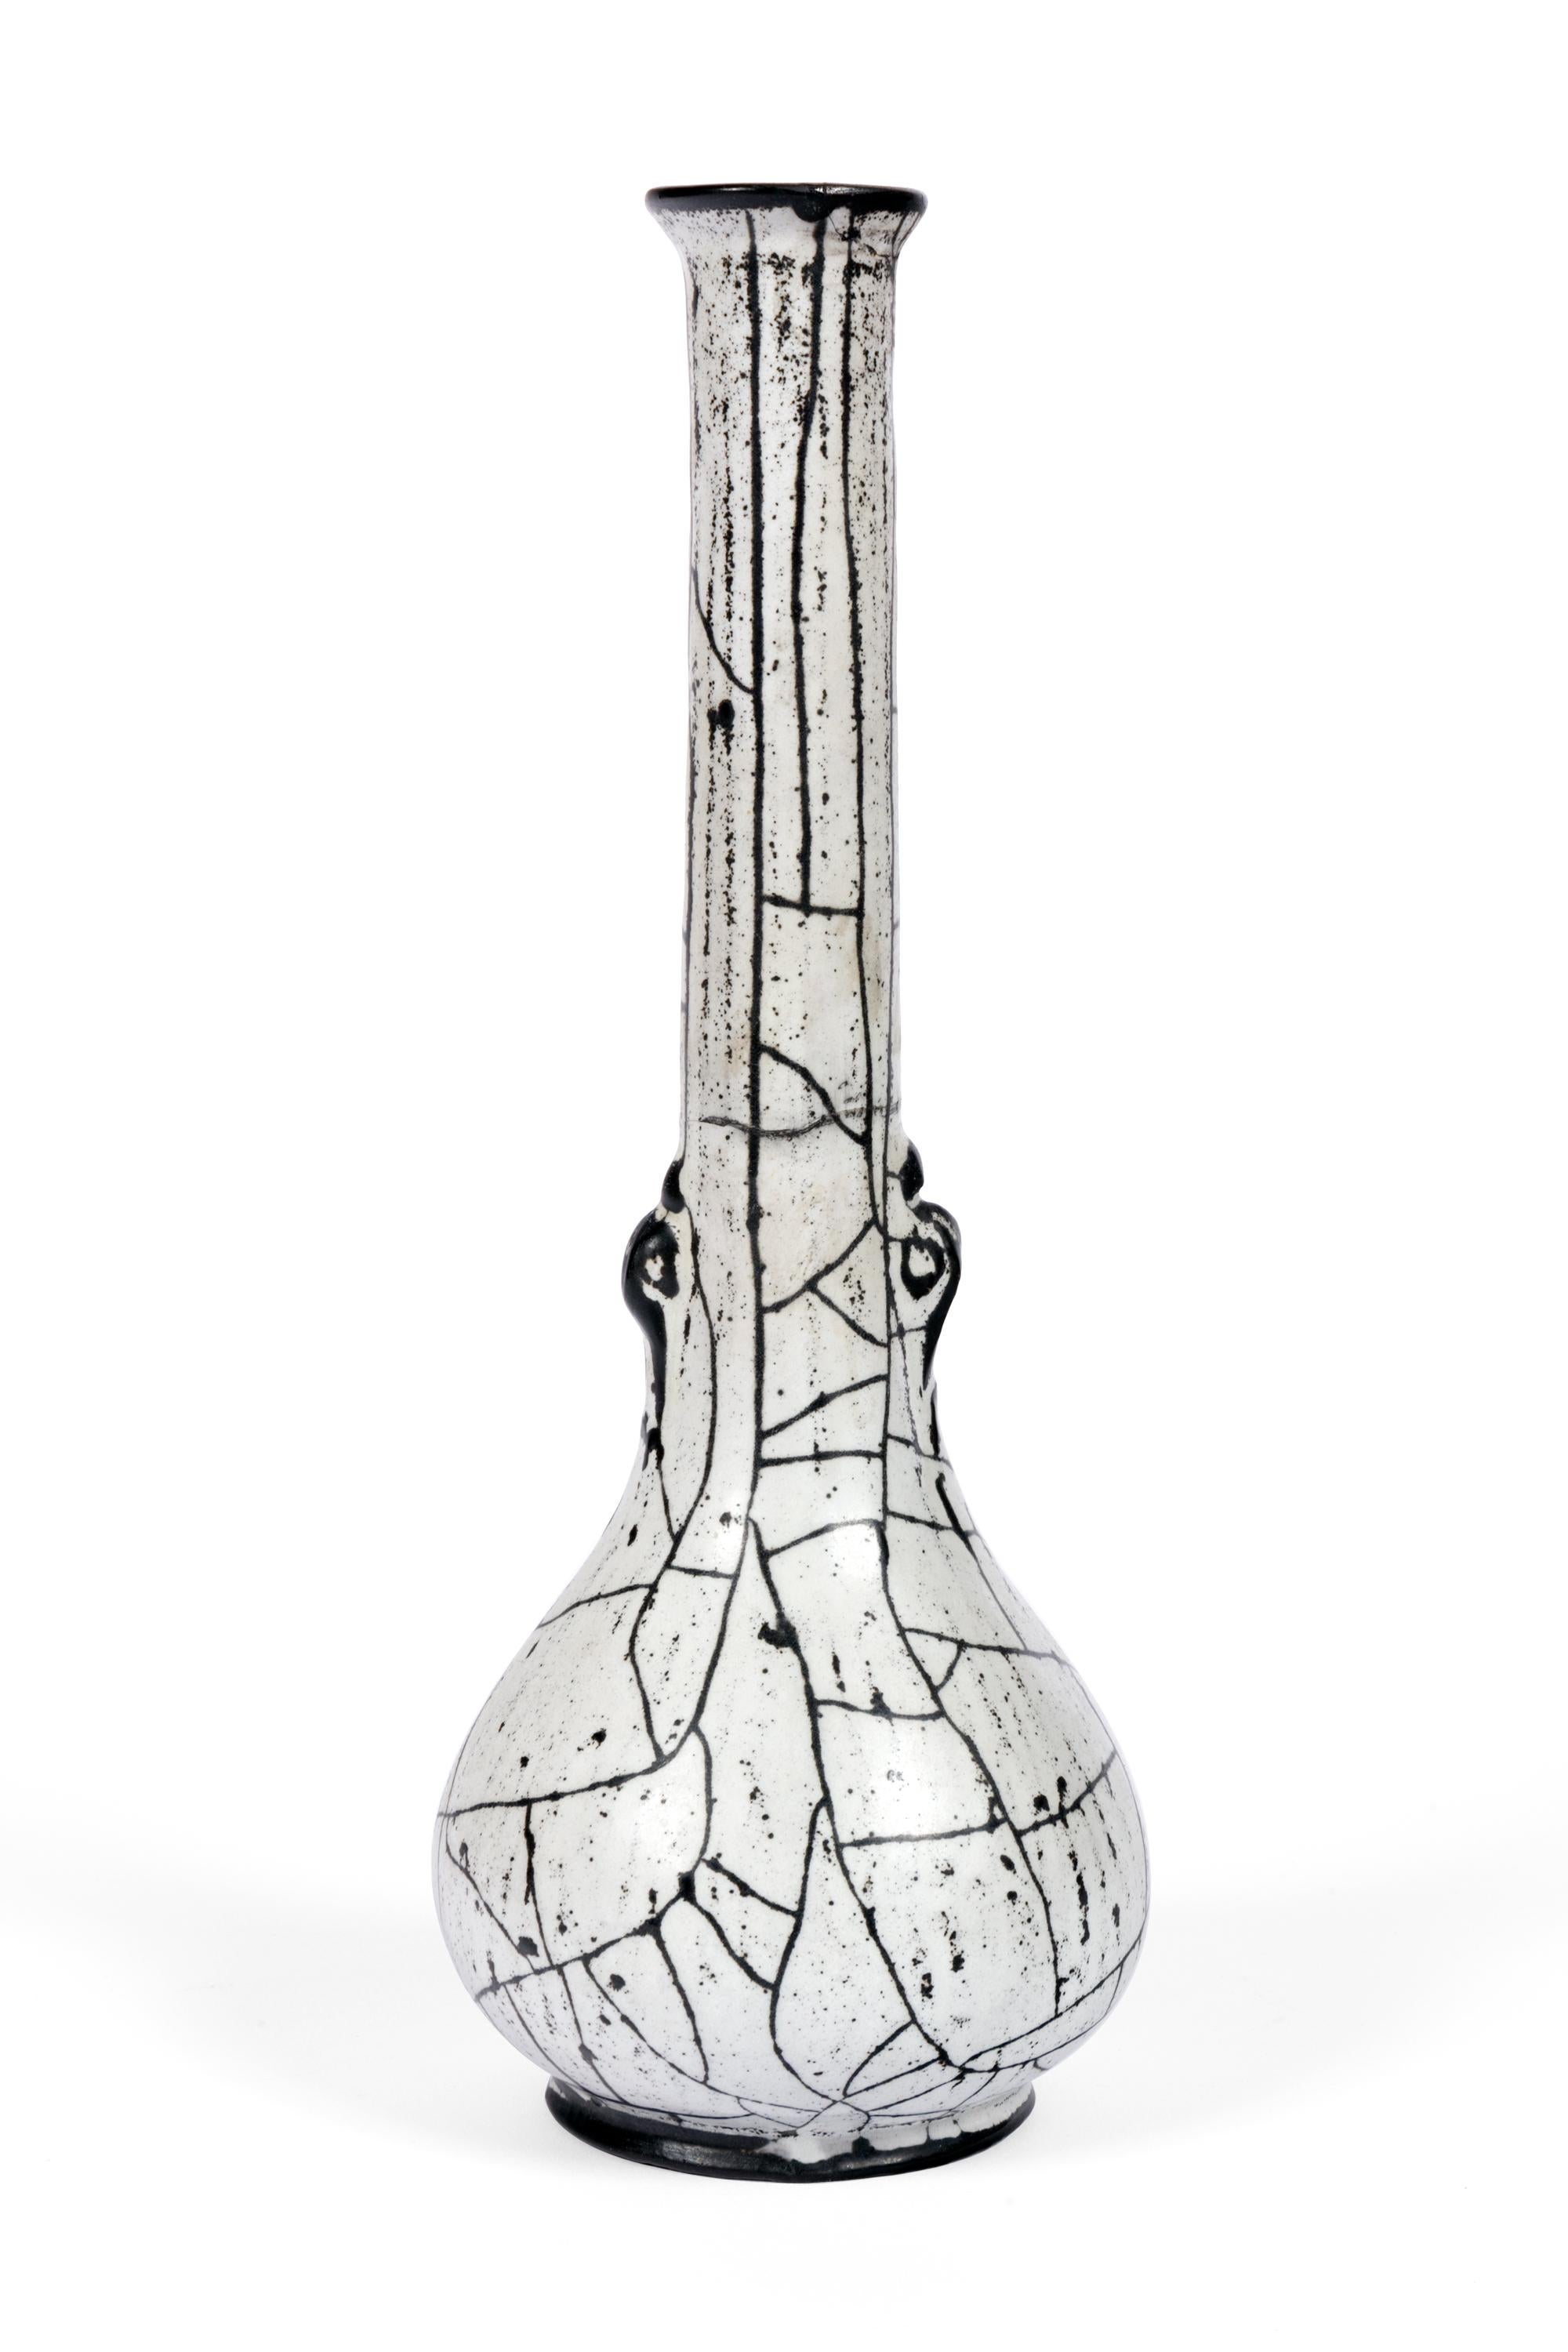 A lovely vase with a fascinating glaze by Svend Hammershoj for Herman A. Kahler.